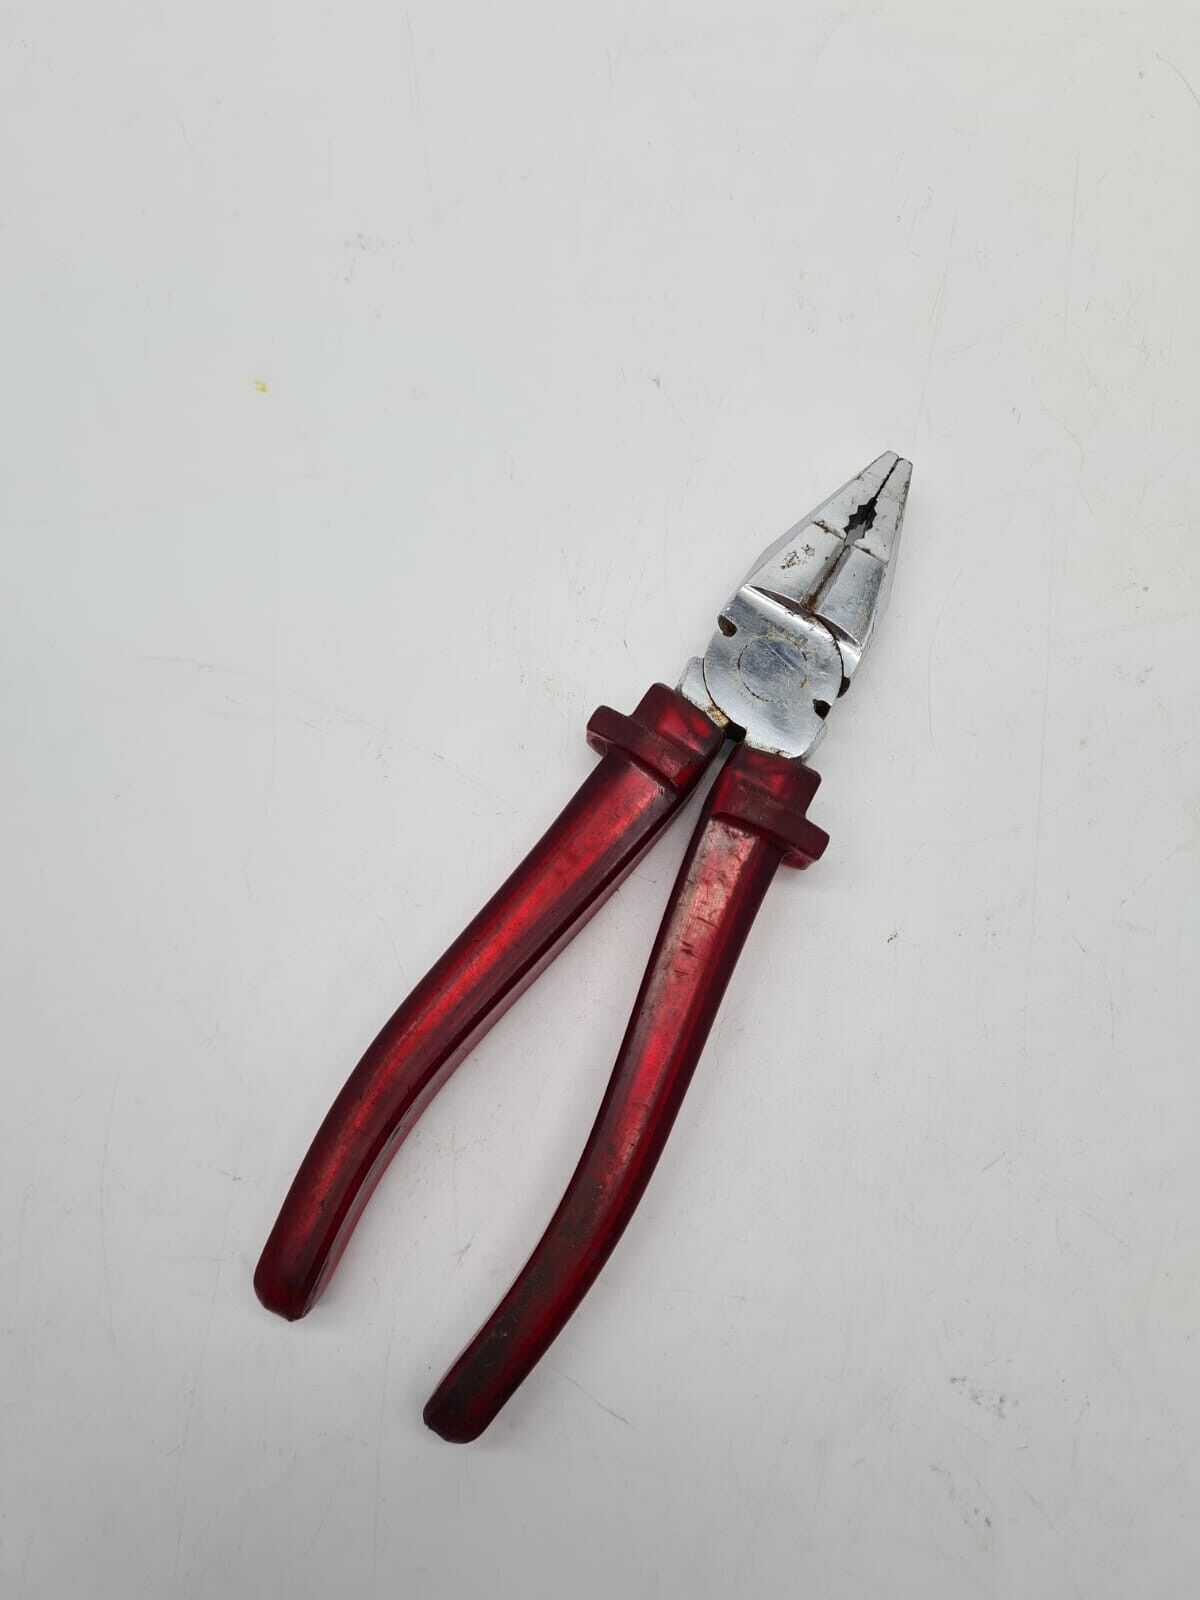 Usag pliers adaptable/genuine for Lamborghini Diablo tool kit bag